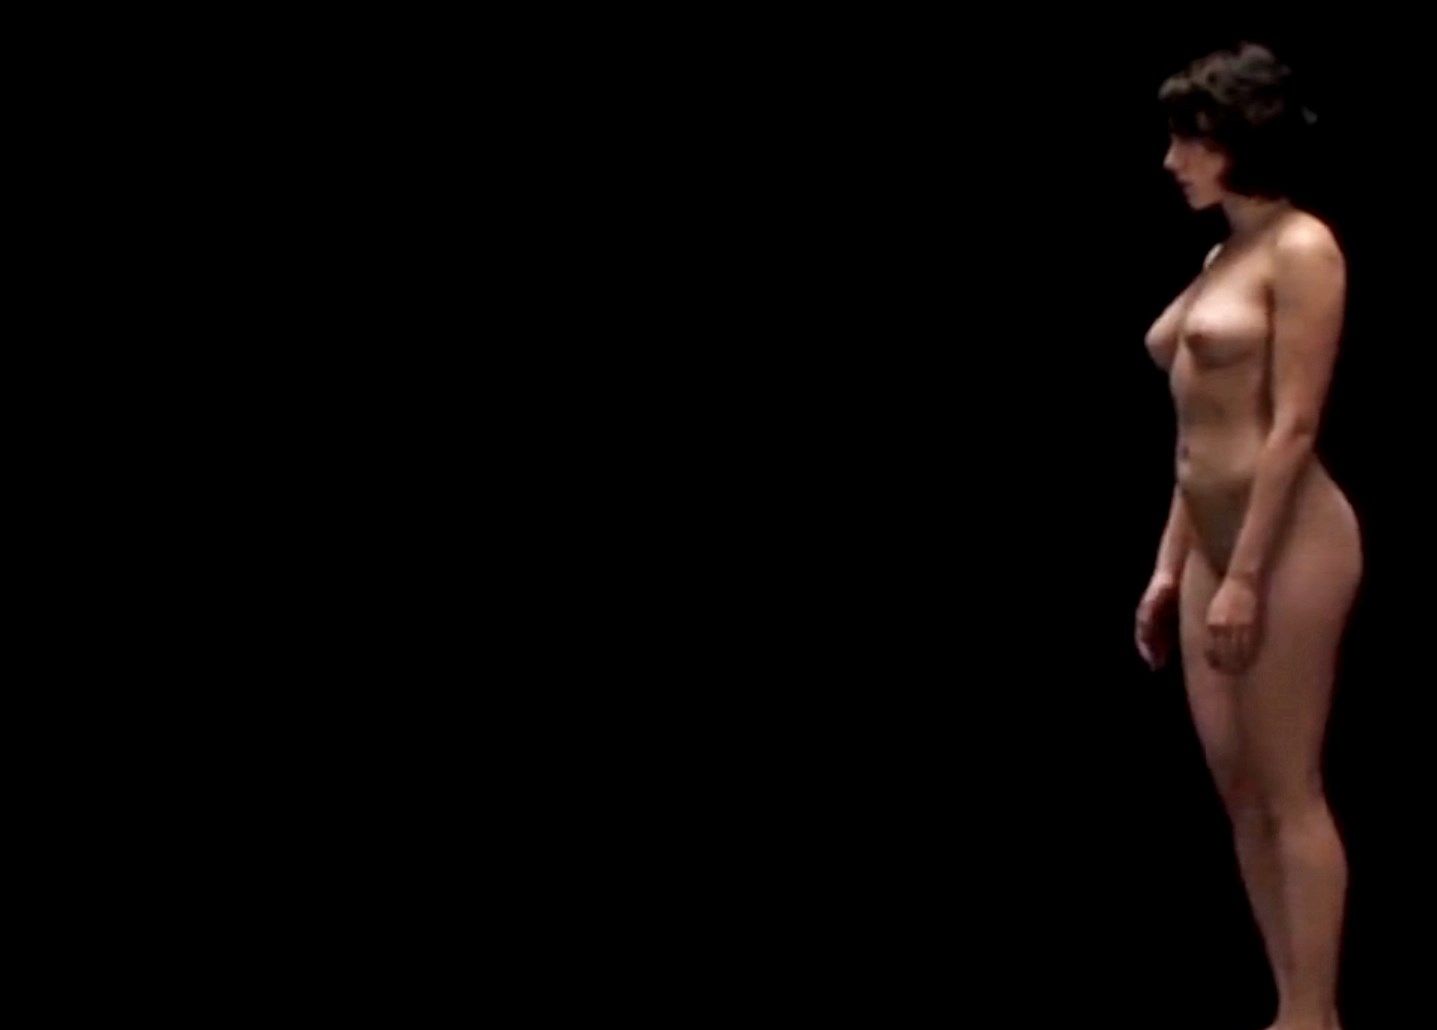 Video scarlet johanson nude Scarlett Johansson